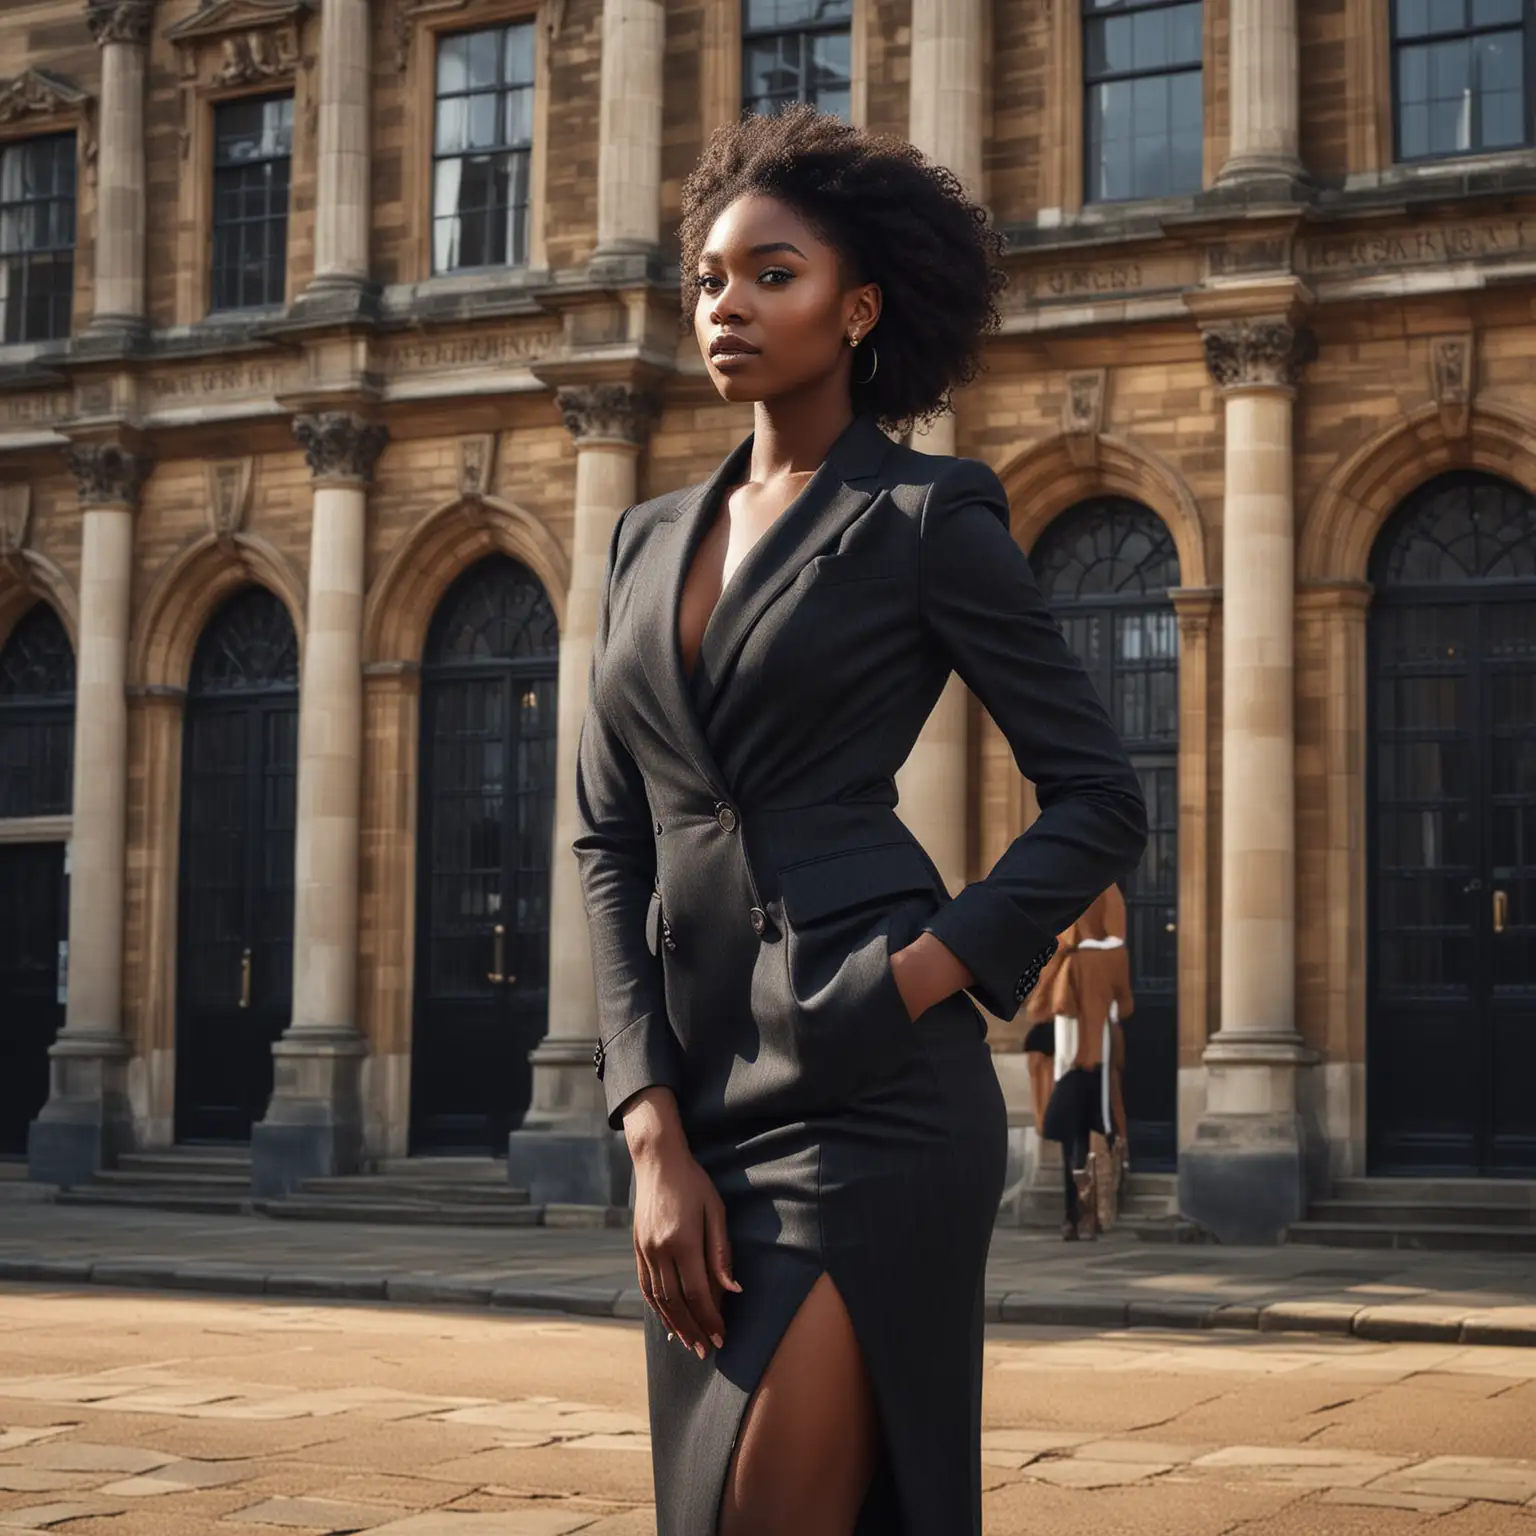 Confident Nigerian Woman at Prestigious UK University Professional Portrait in 8K HDR